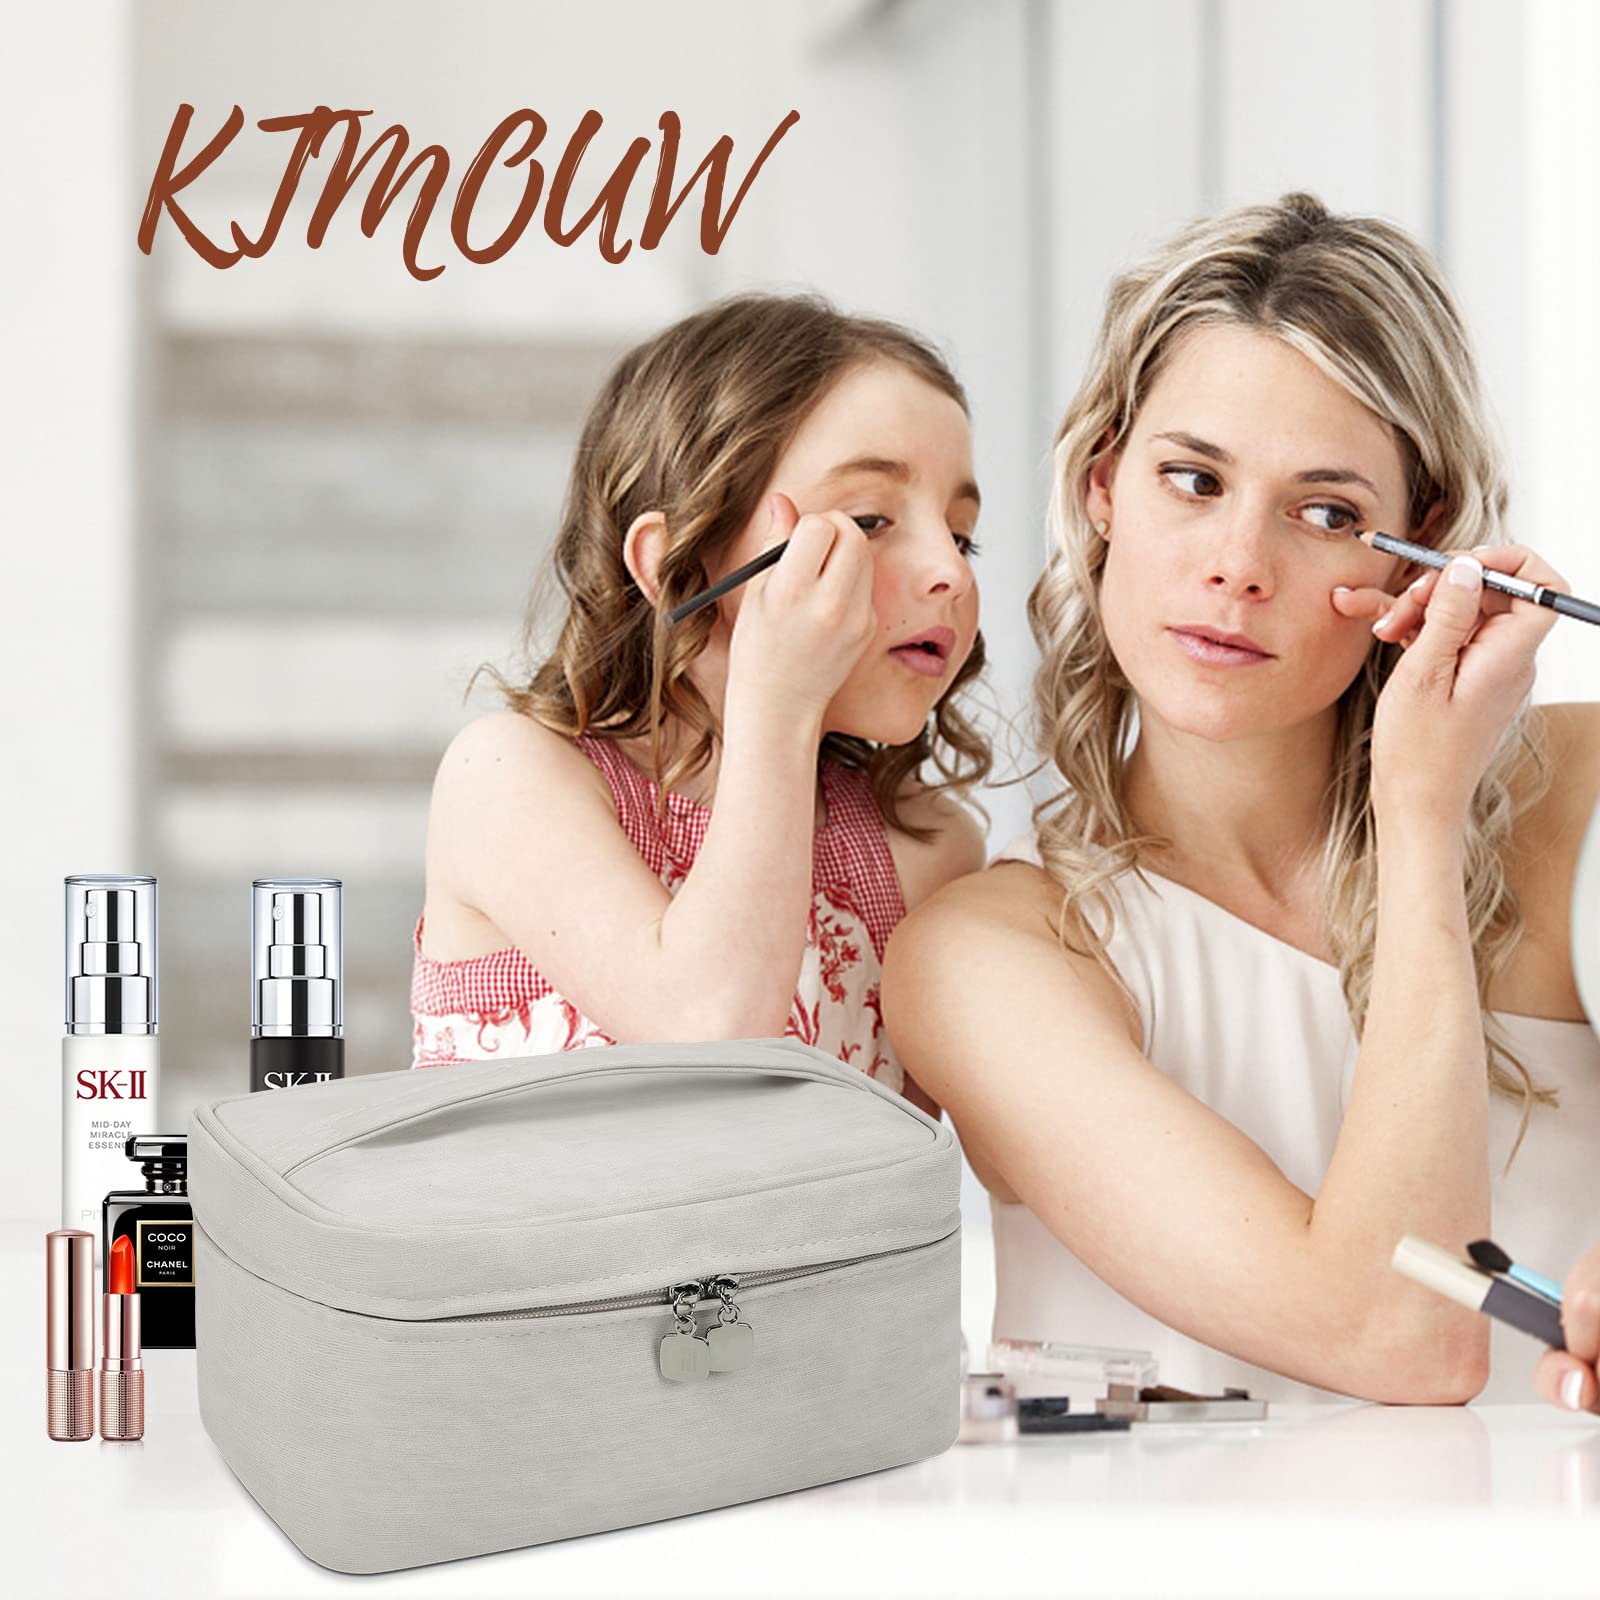 KTMOUW Makeup Bag Waterproof Cosmetic Bag Leather Makeup Travel Bag Portable Makeup Brush Bag Multifunctional Makeup Organizer Bag for Women Girls, 2-Pack, Grey